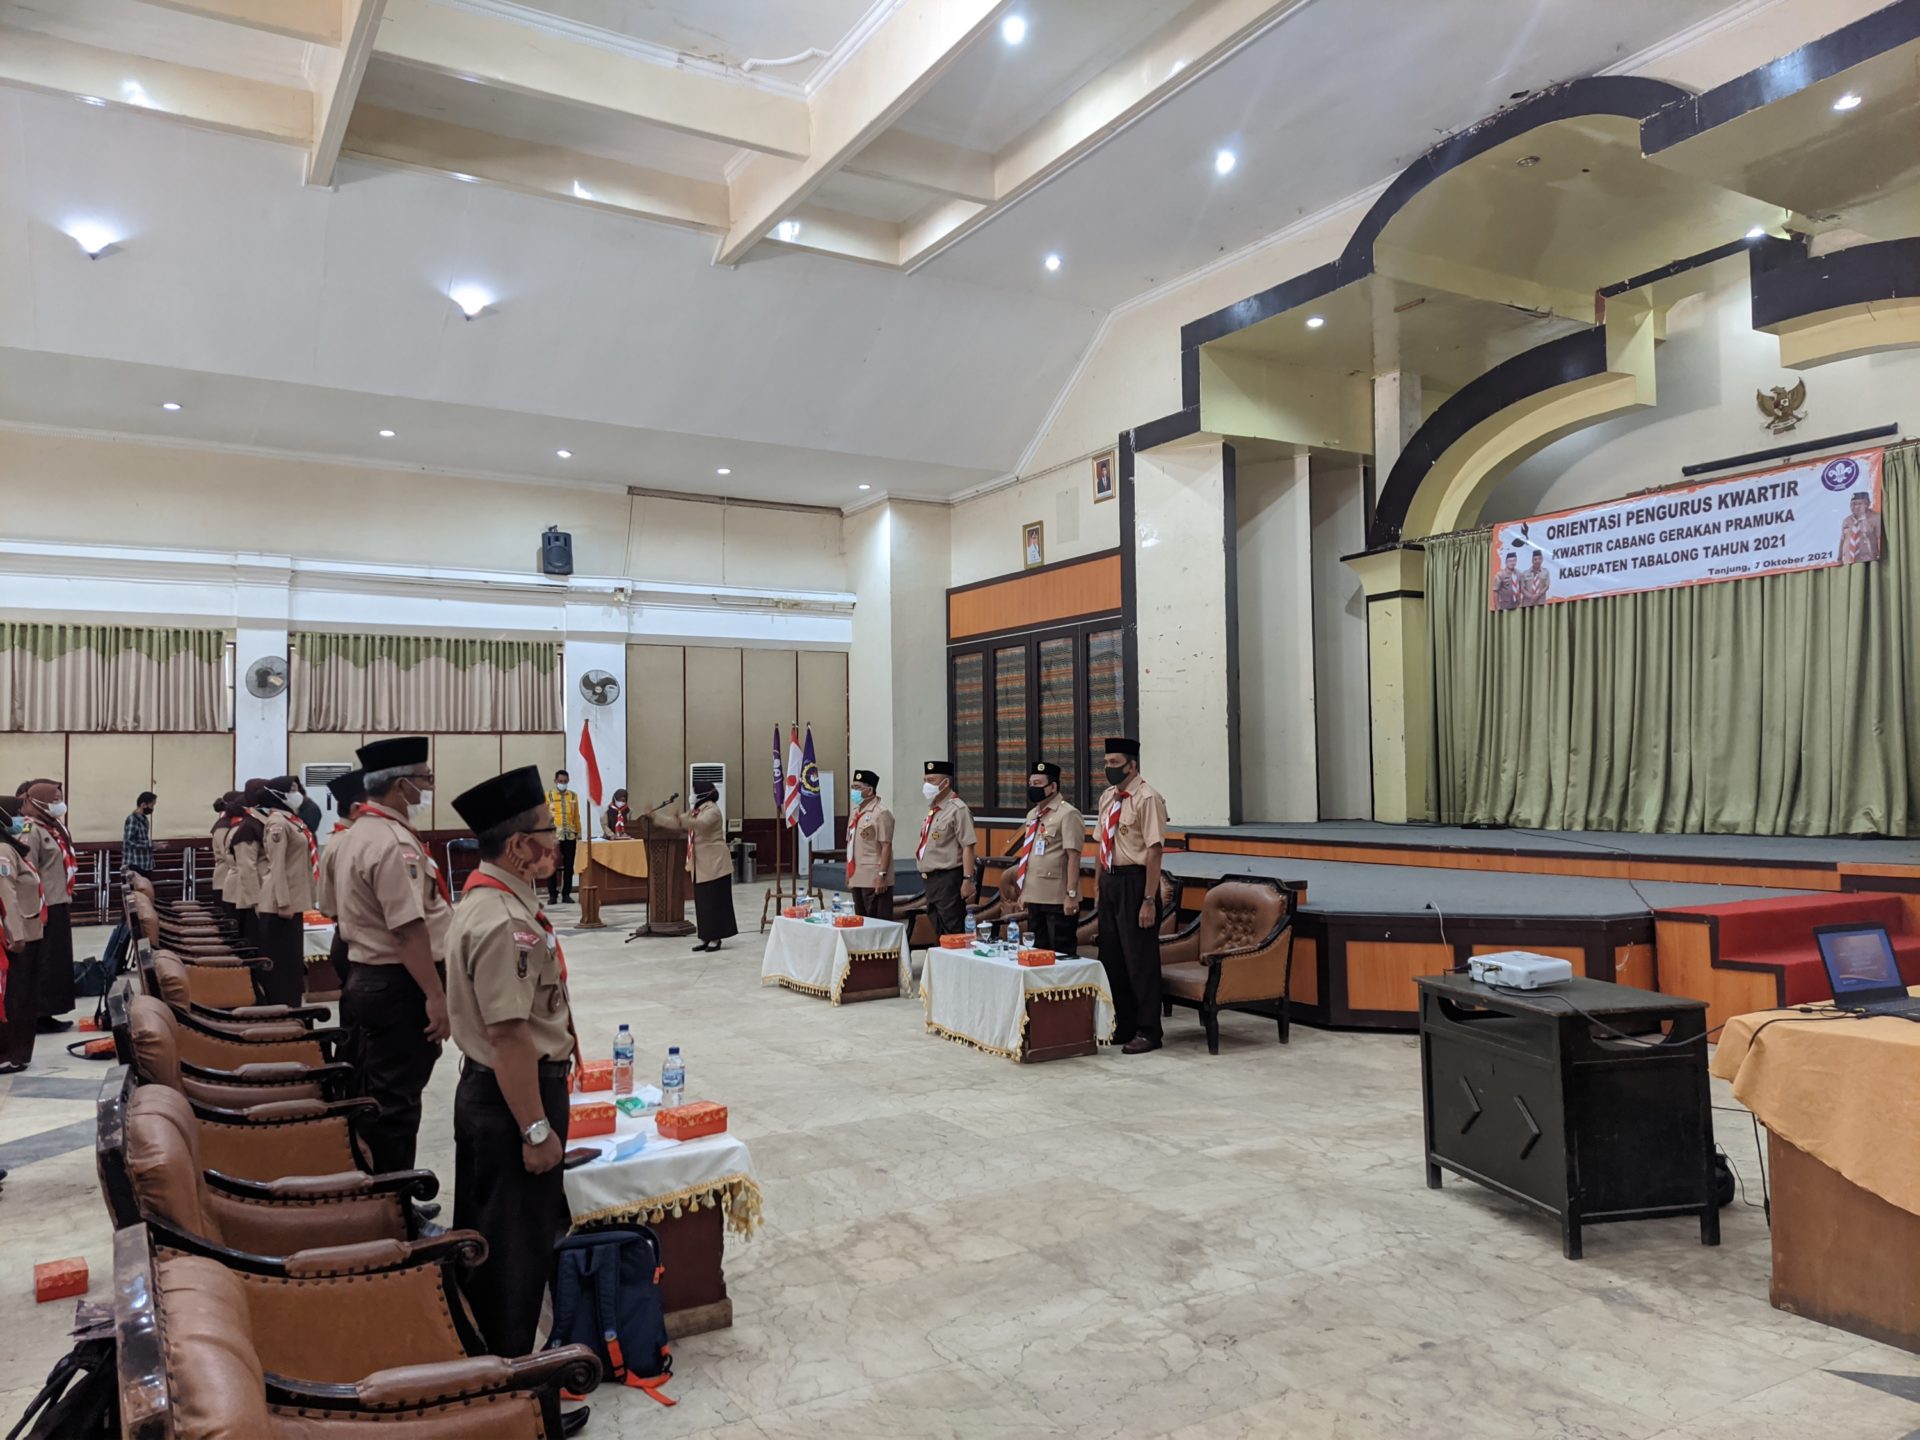 Kegiatan orientasi pengurus kwartir gerakan pramuka se Kabupaten Tabalong yang dilaksanakan di Gedung Sarabakawa.